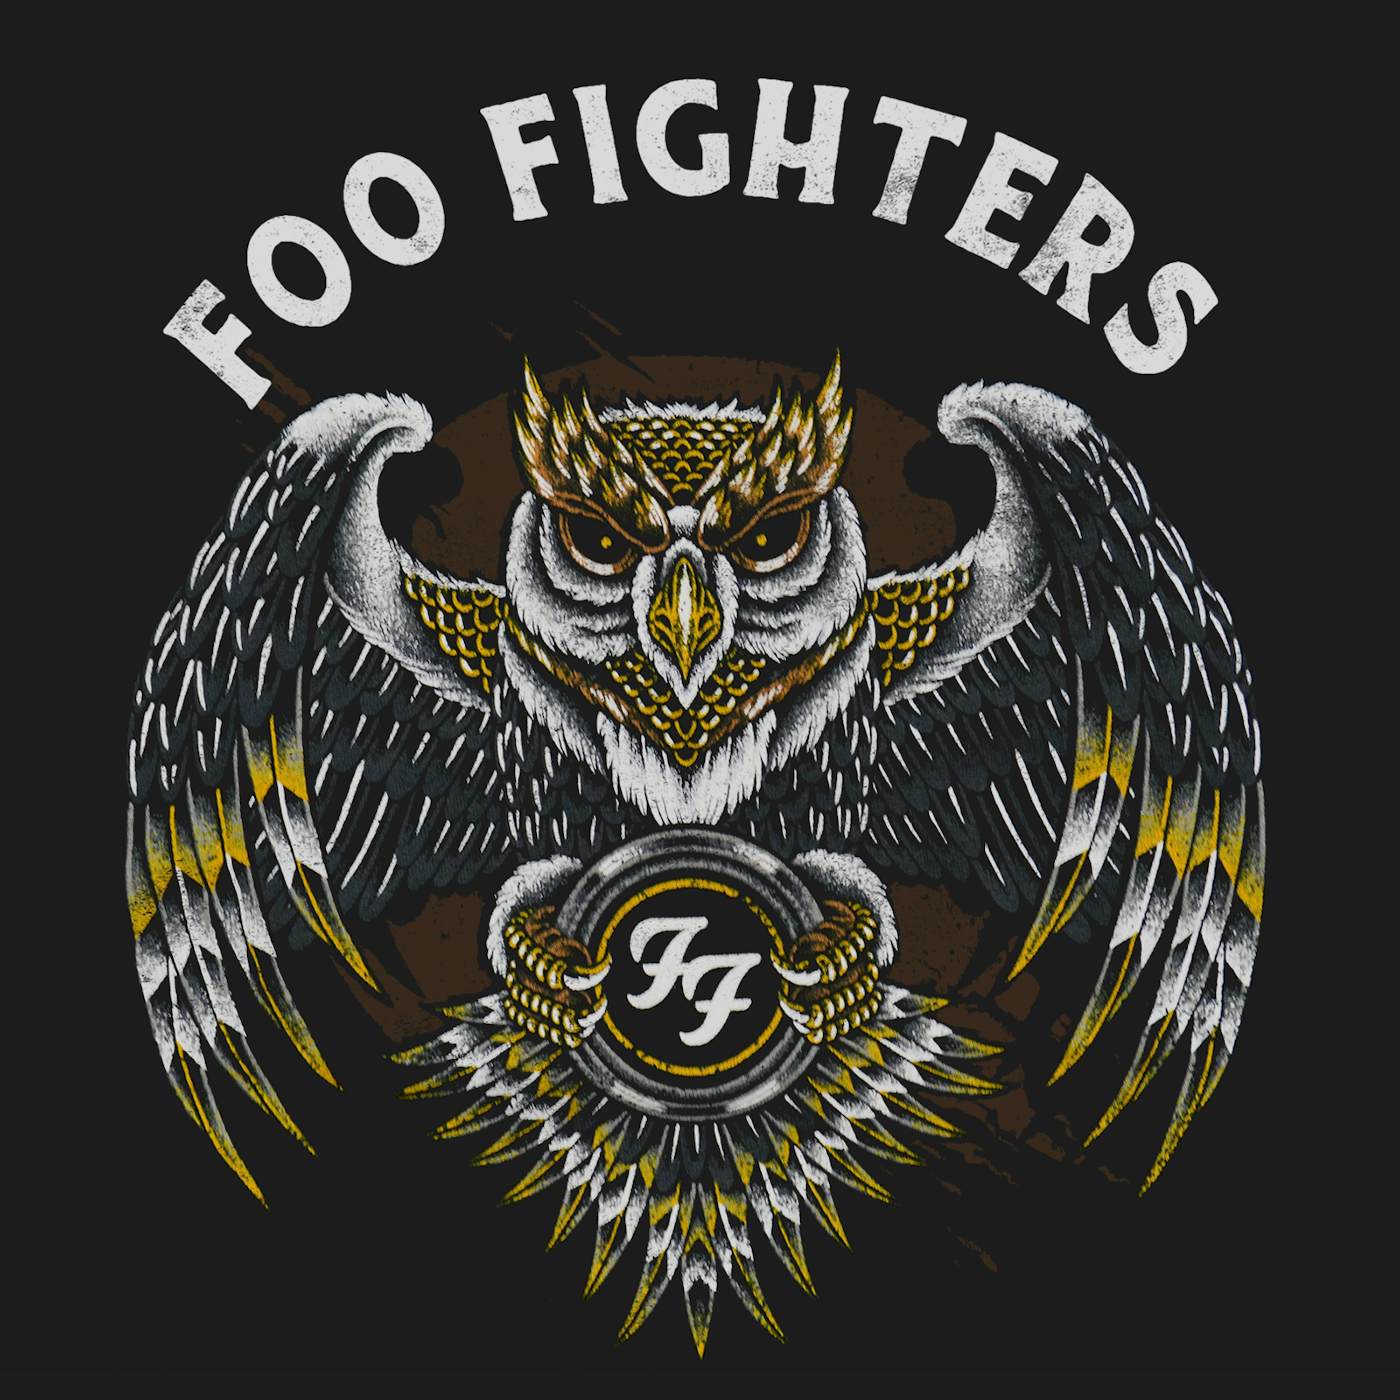 Foo Fighters T-Shirt | Owl Logo Foo Fighters Shirt